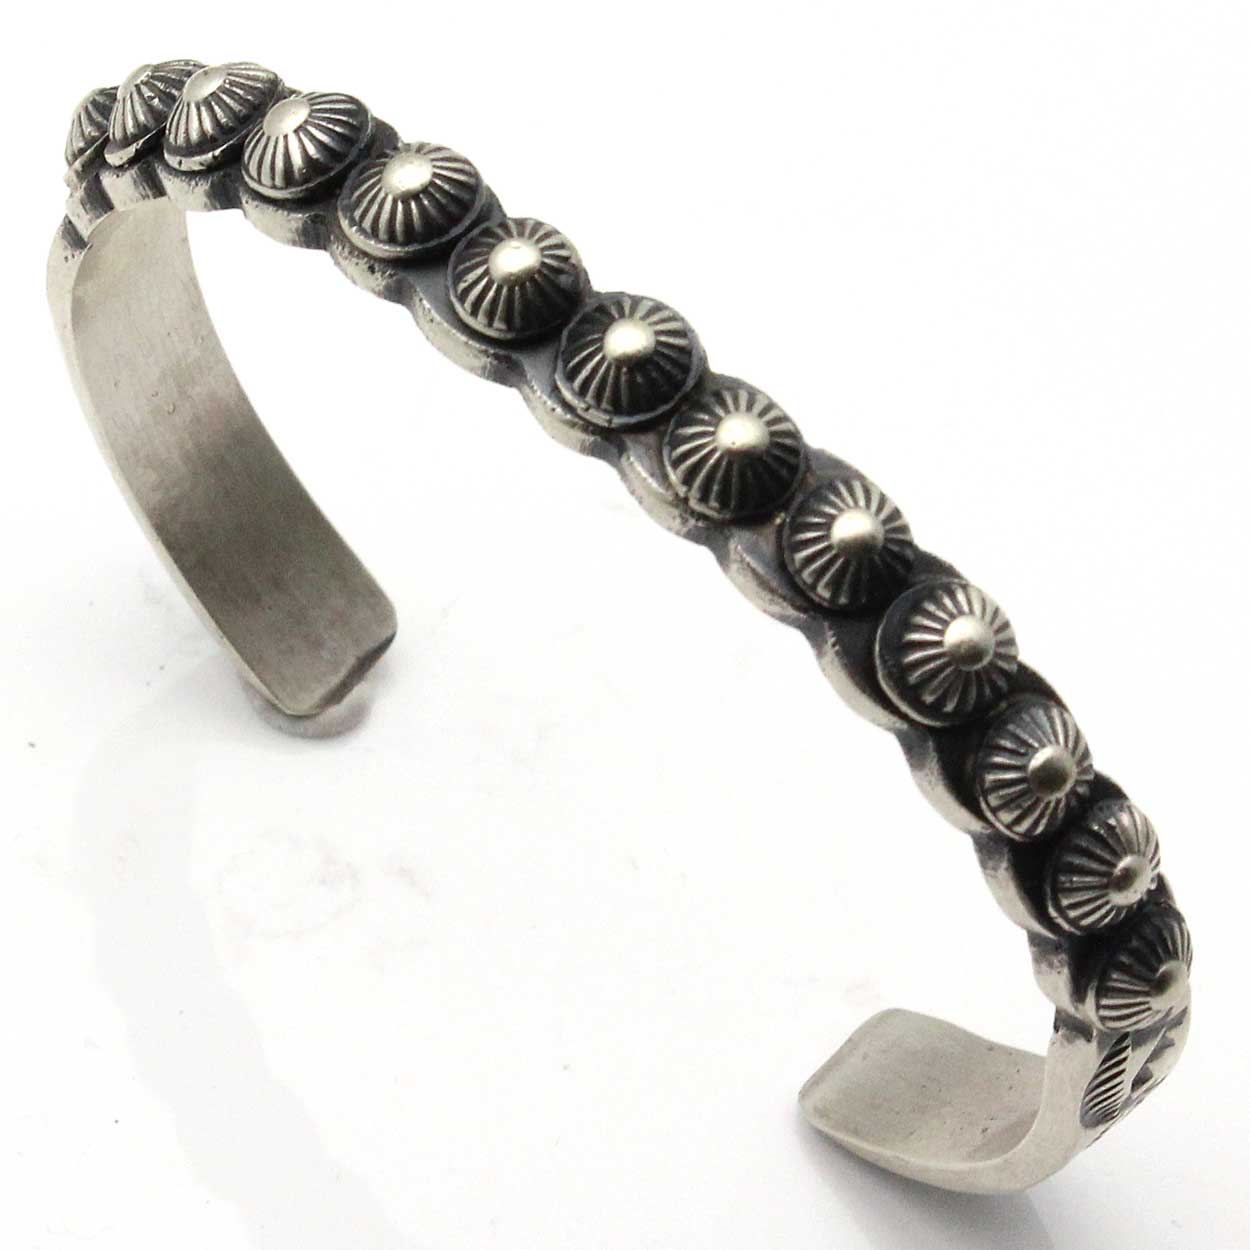 Navajo Silver Bracelet Featuring Hogan Beads